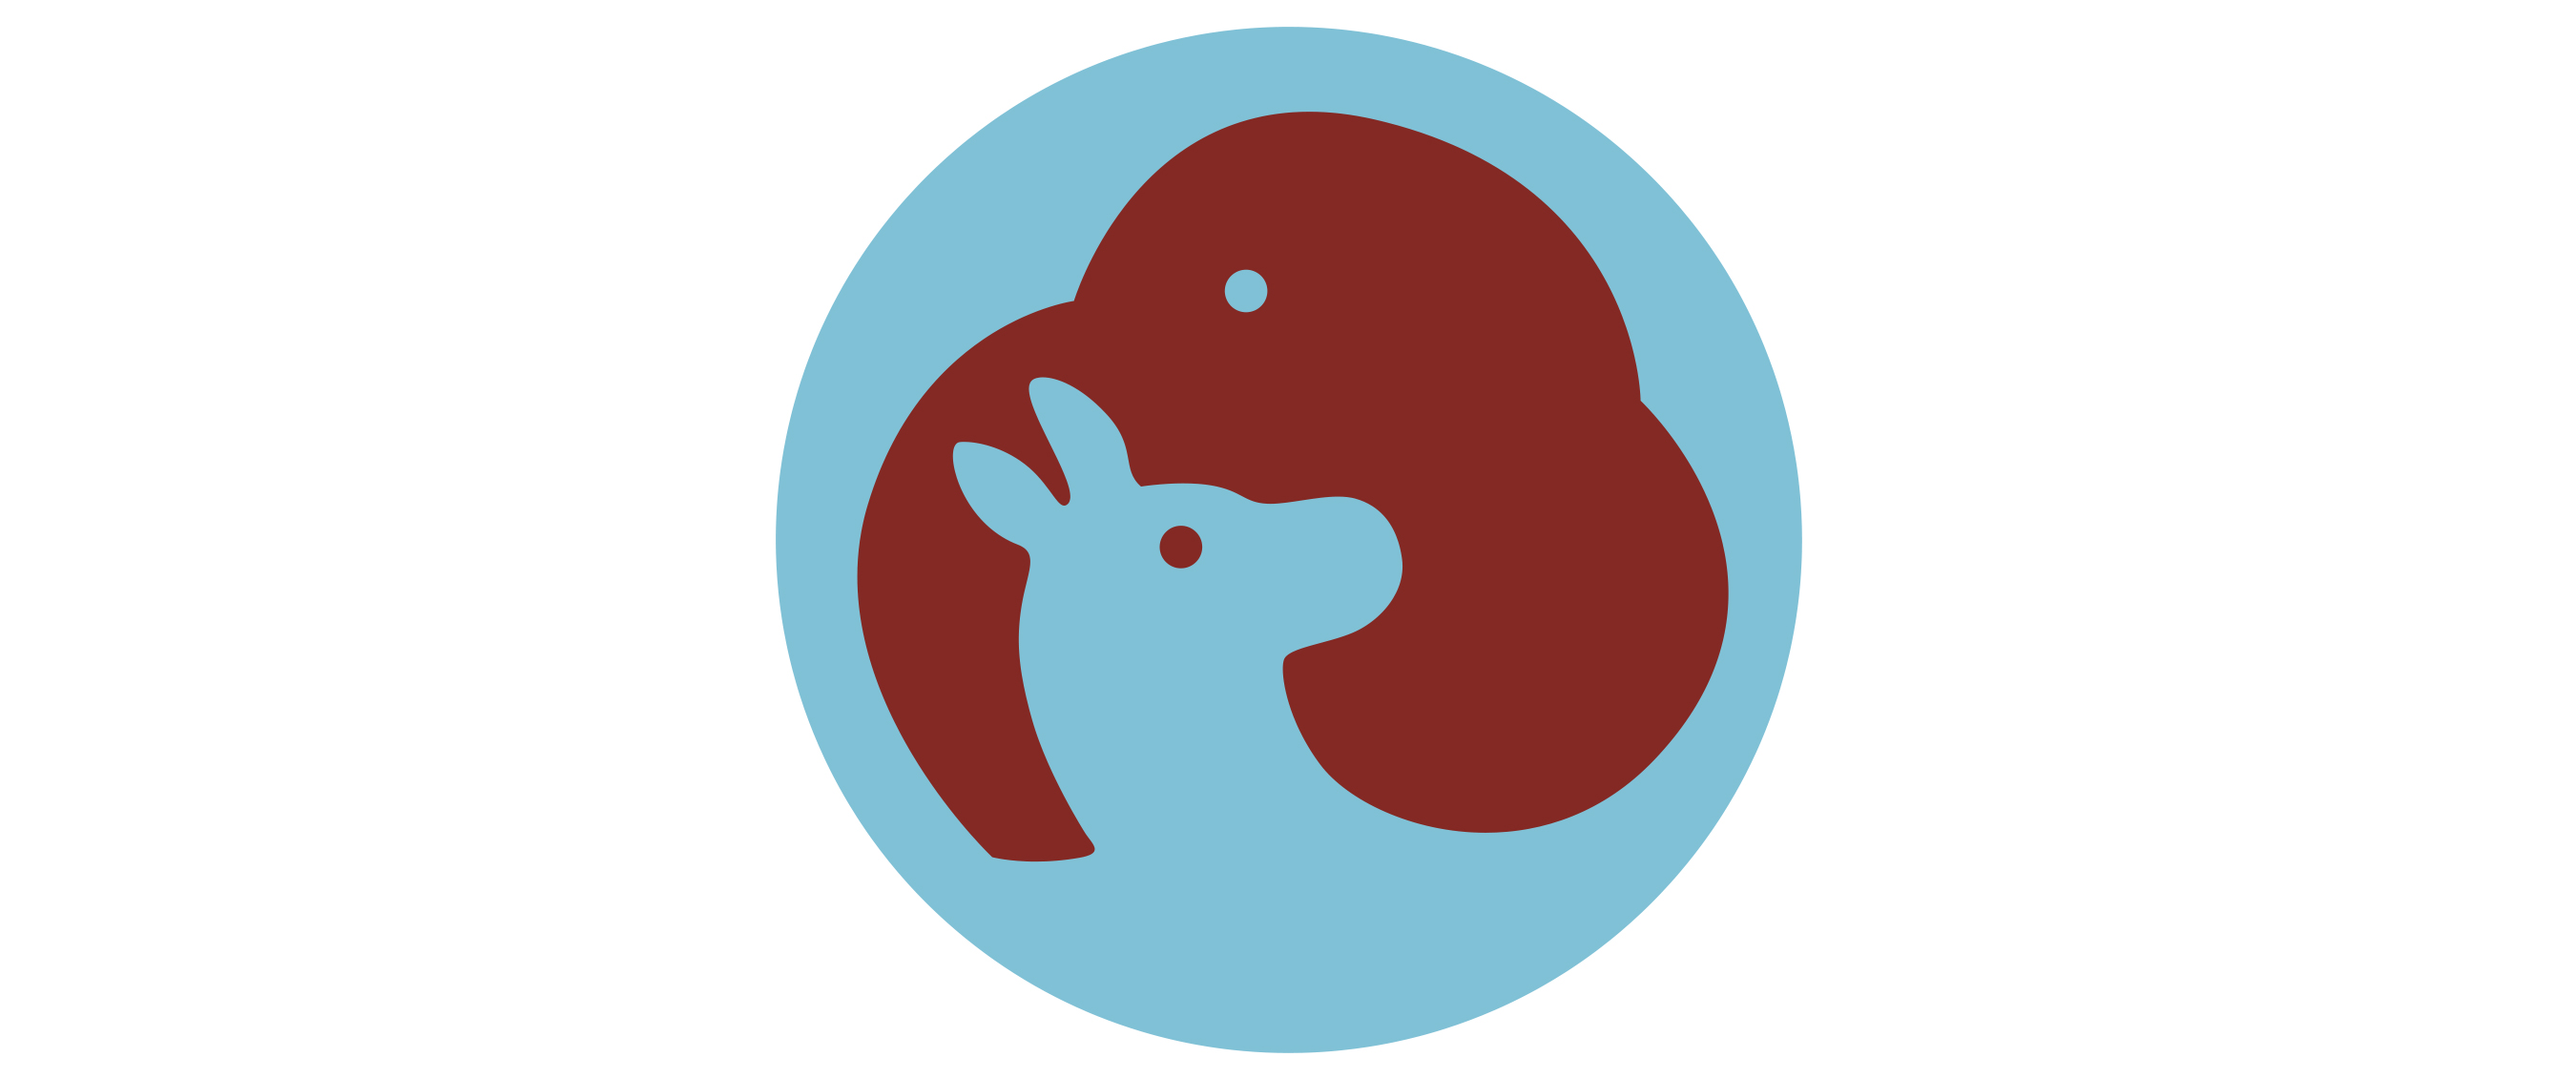 democrat-republican-logo